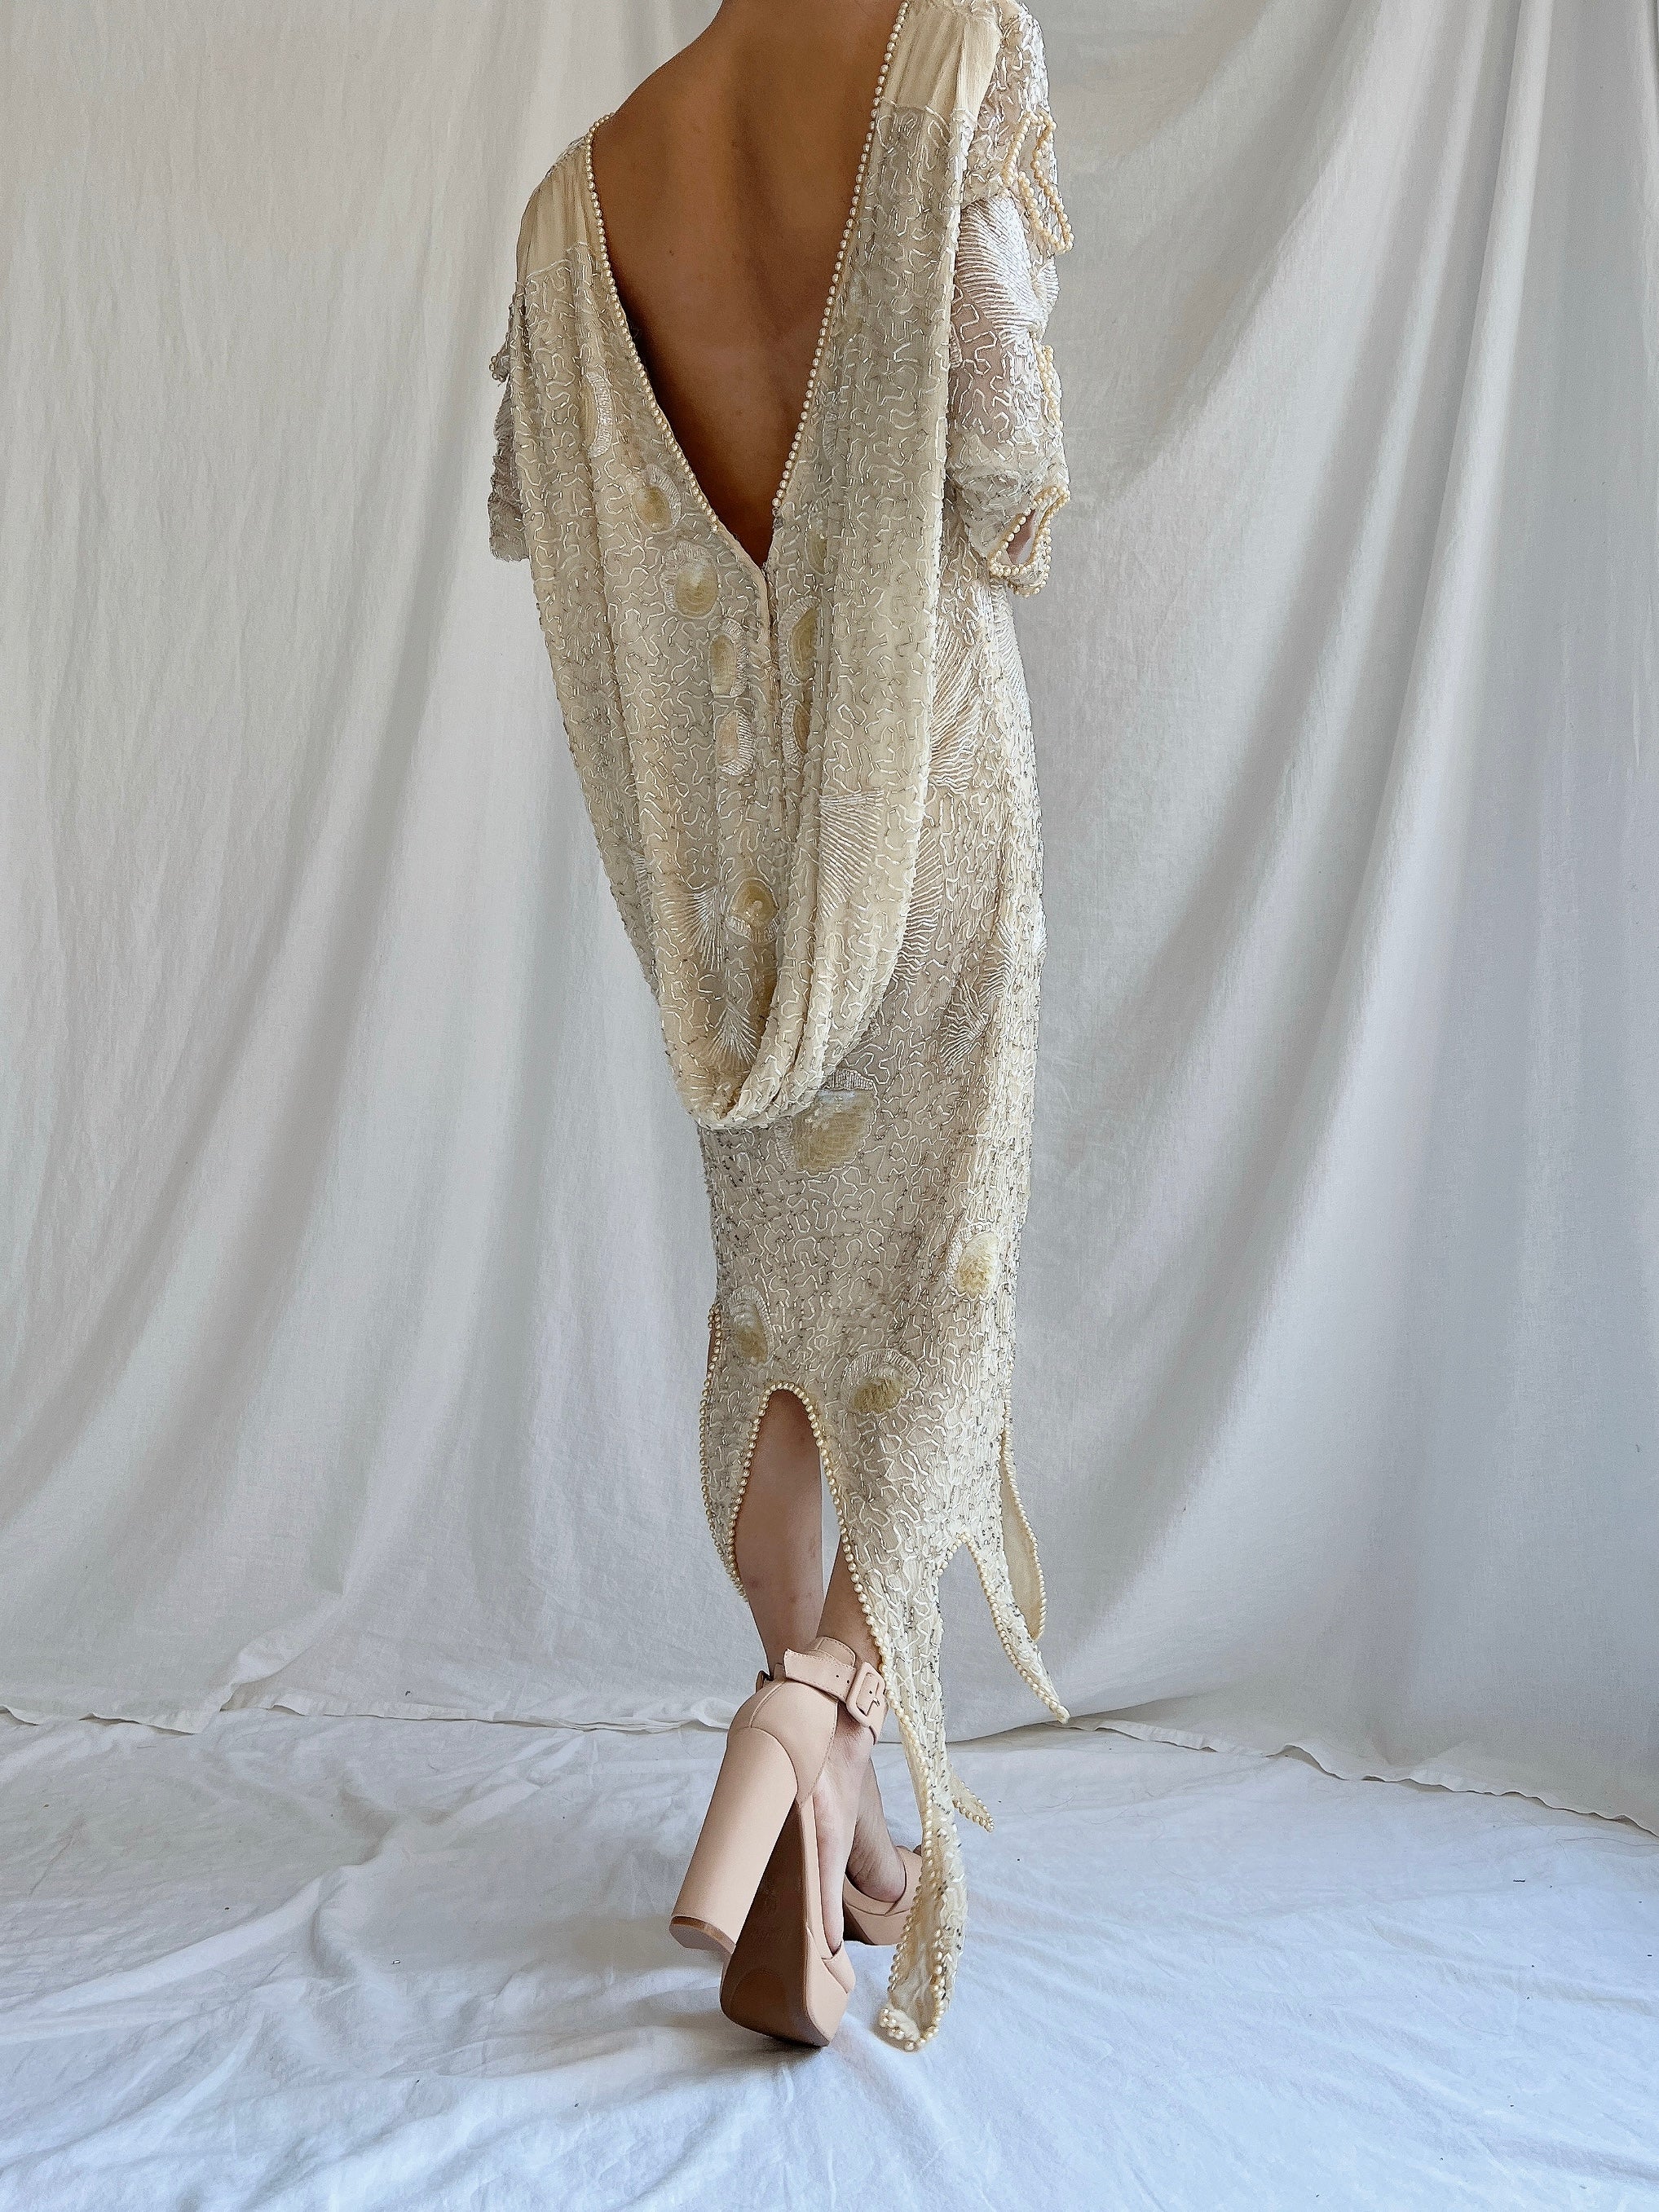 1970s Silk Beaded Dress - M